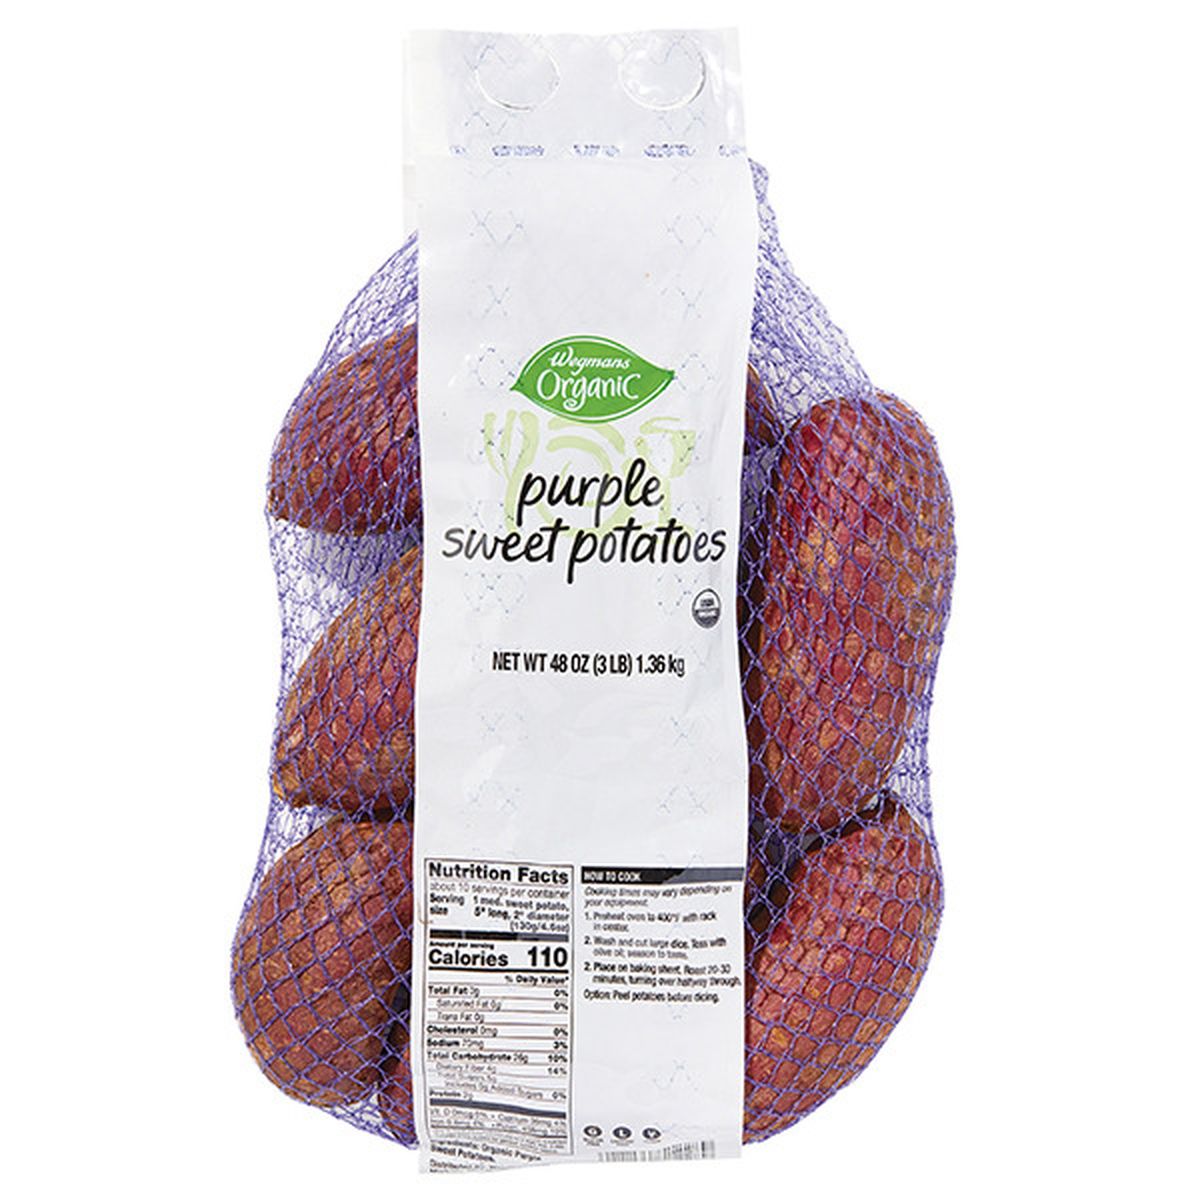 Calories in Organic Purple Sweet Potatoes